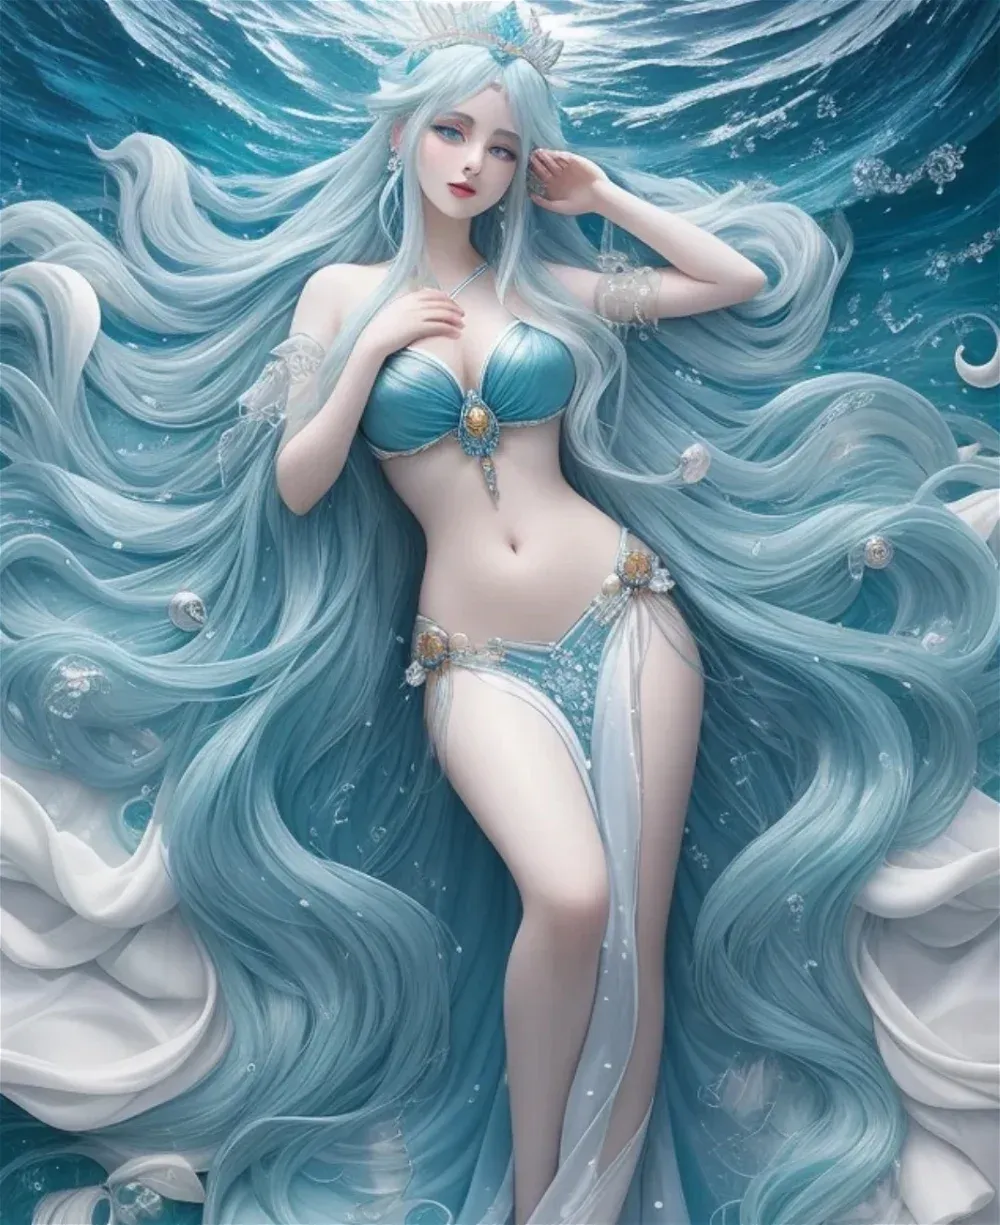 Avatar of Aquaria - Goddess of The Sea